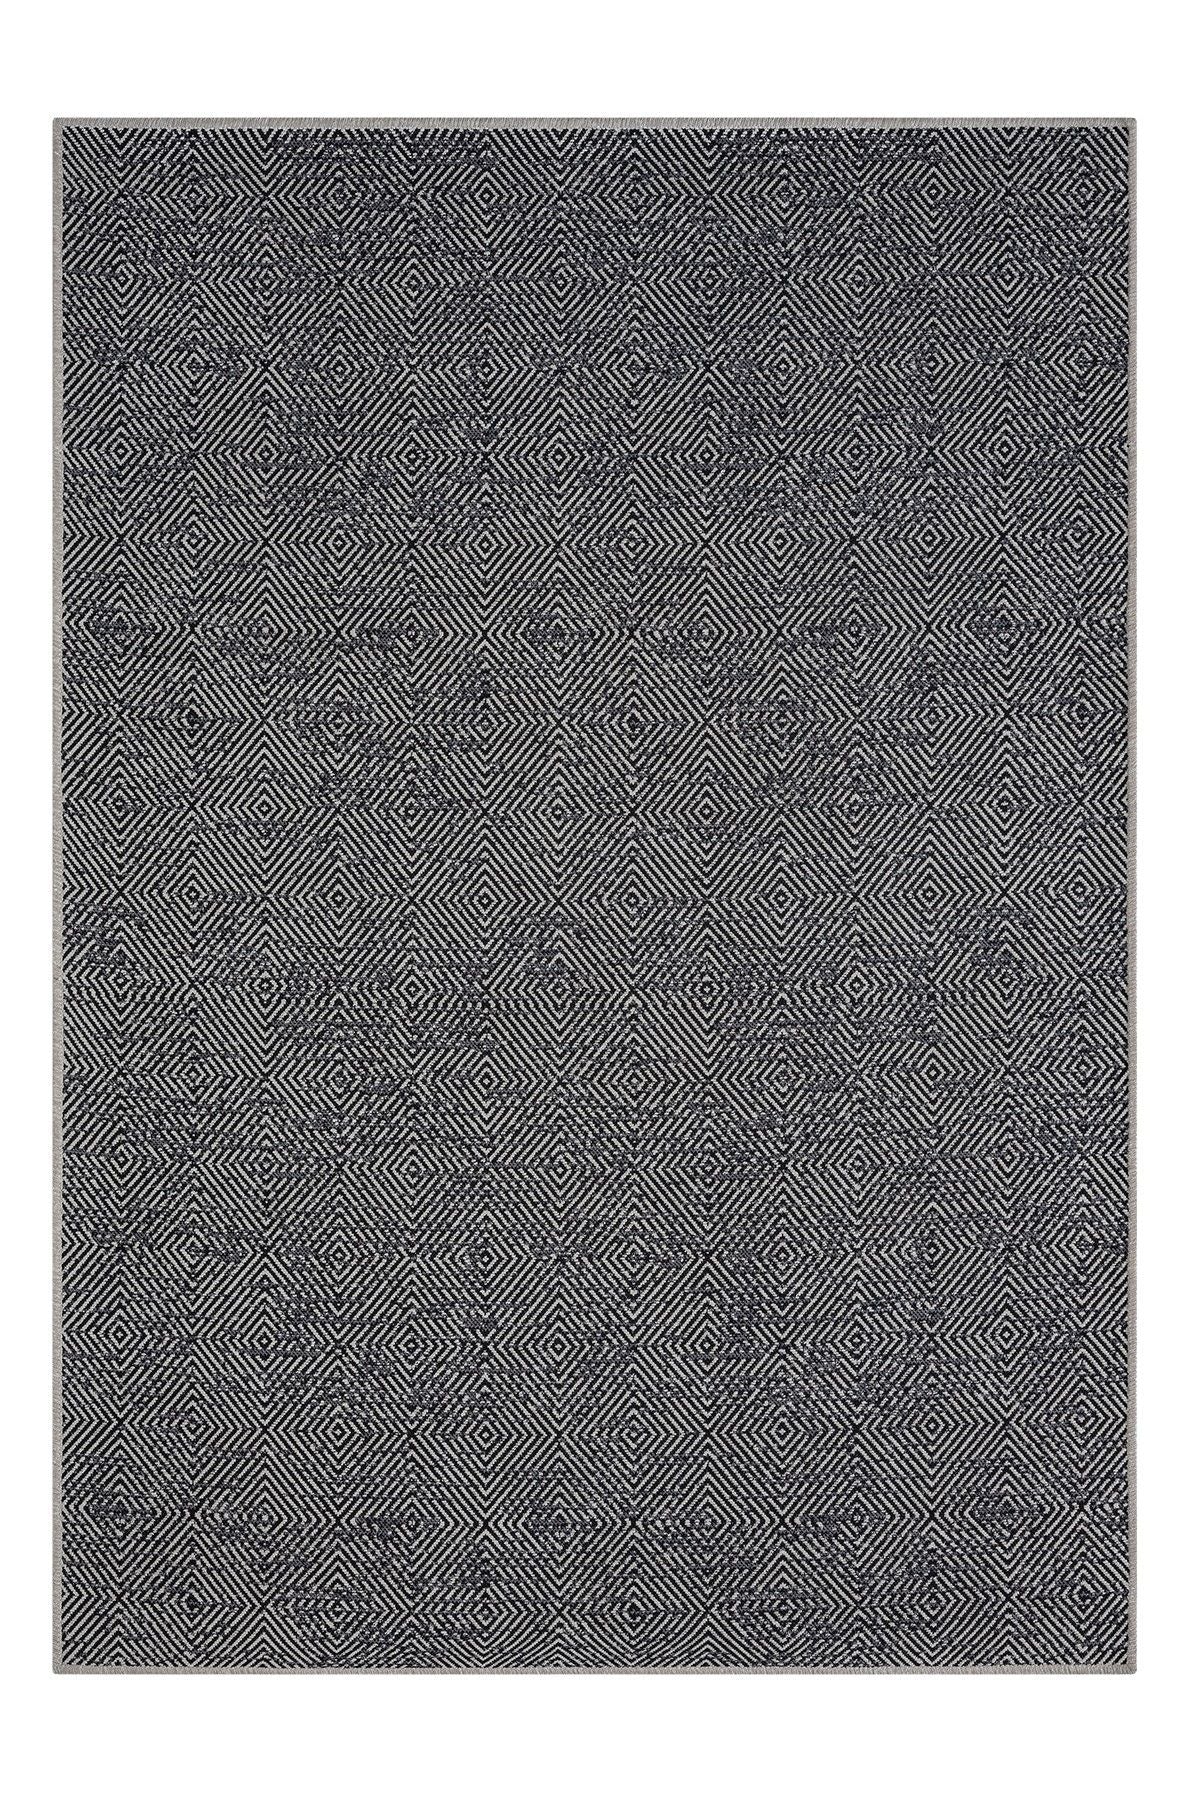 Terapia 3509 - Carpet (160 x 230)